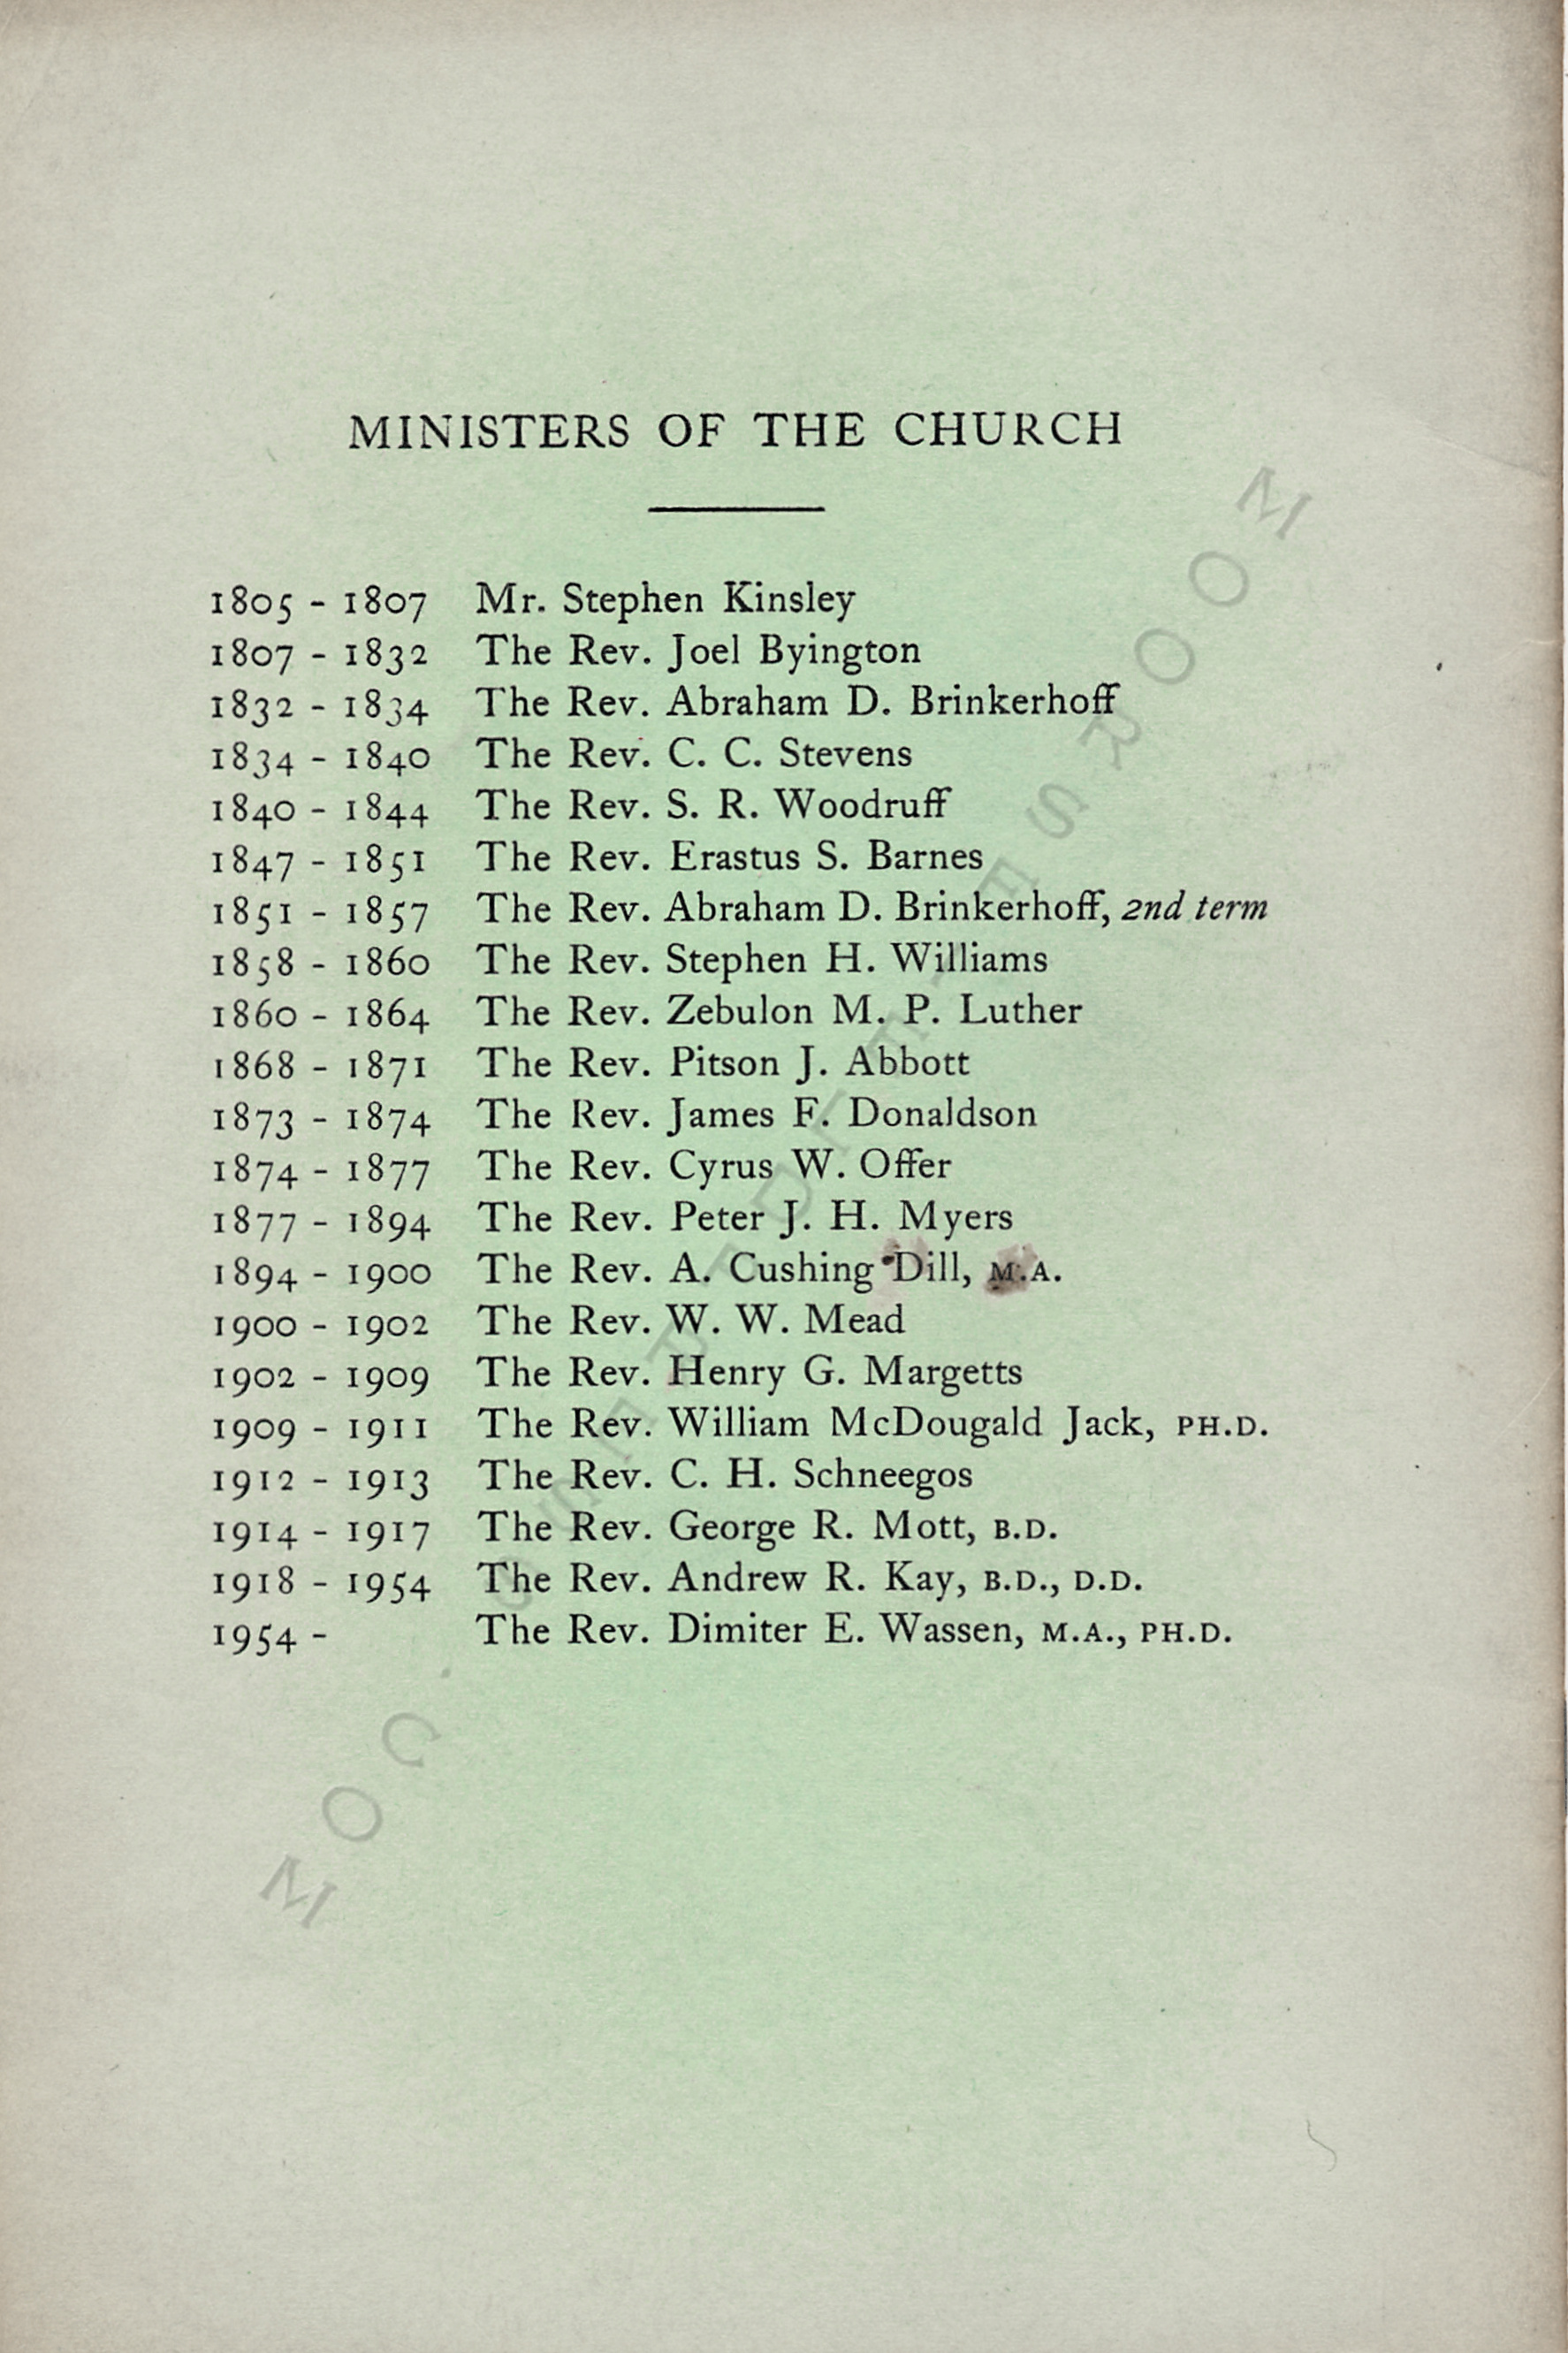 a short
                      history of the presbyterian church of chazy new
                      york 1805-1955